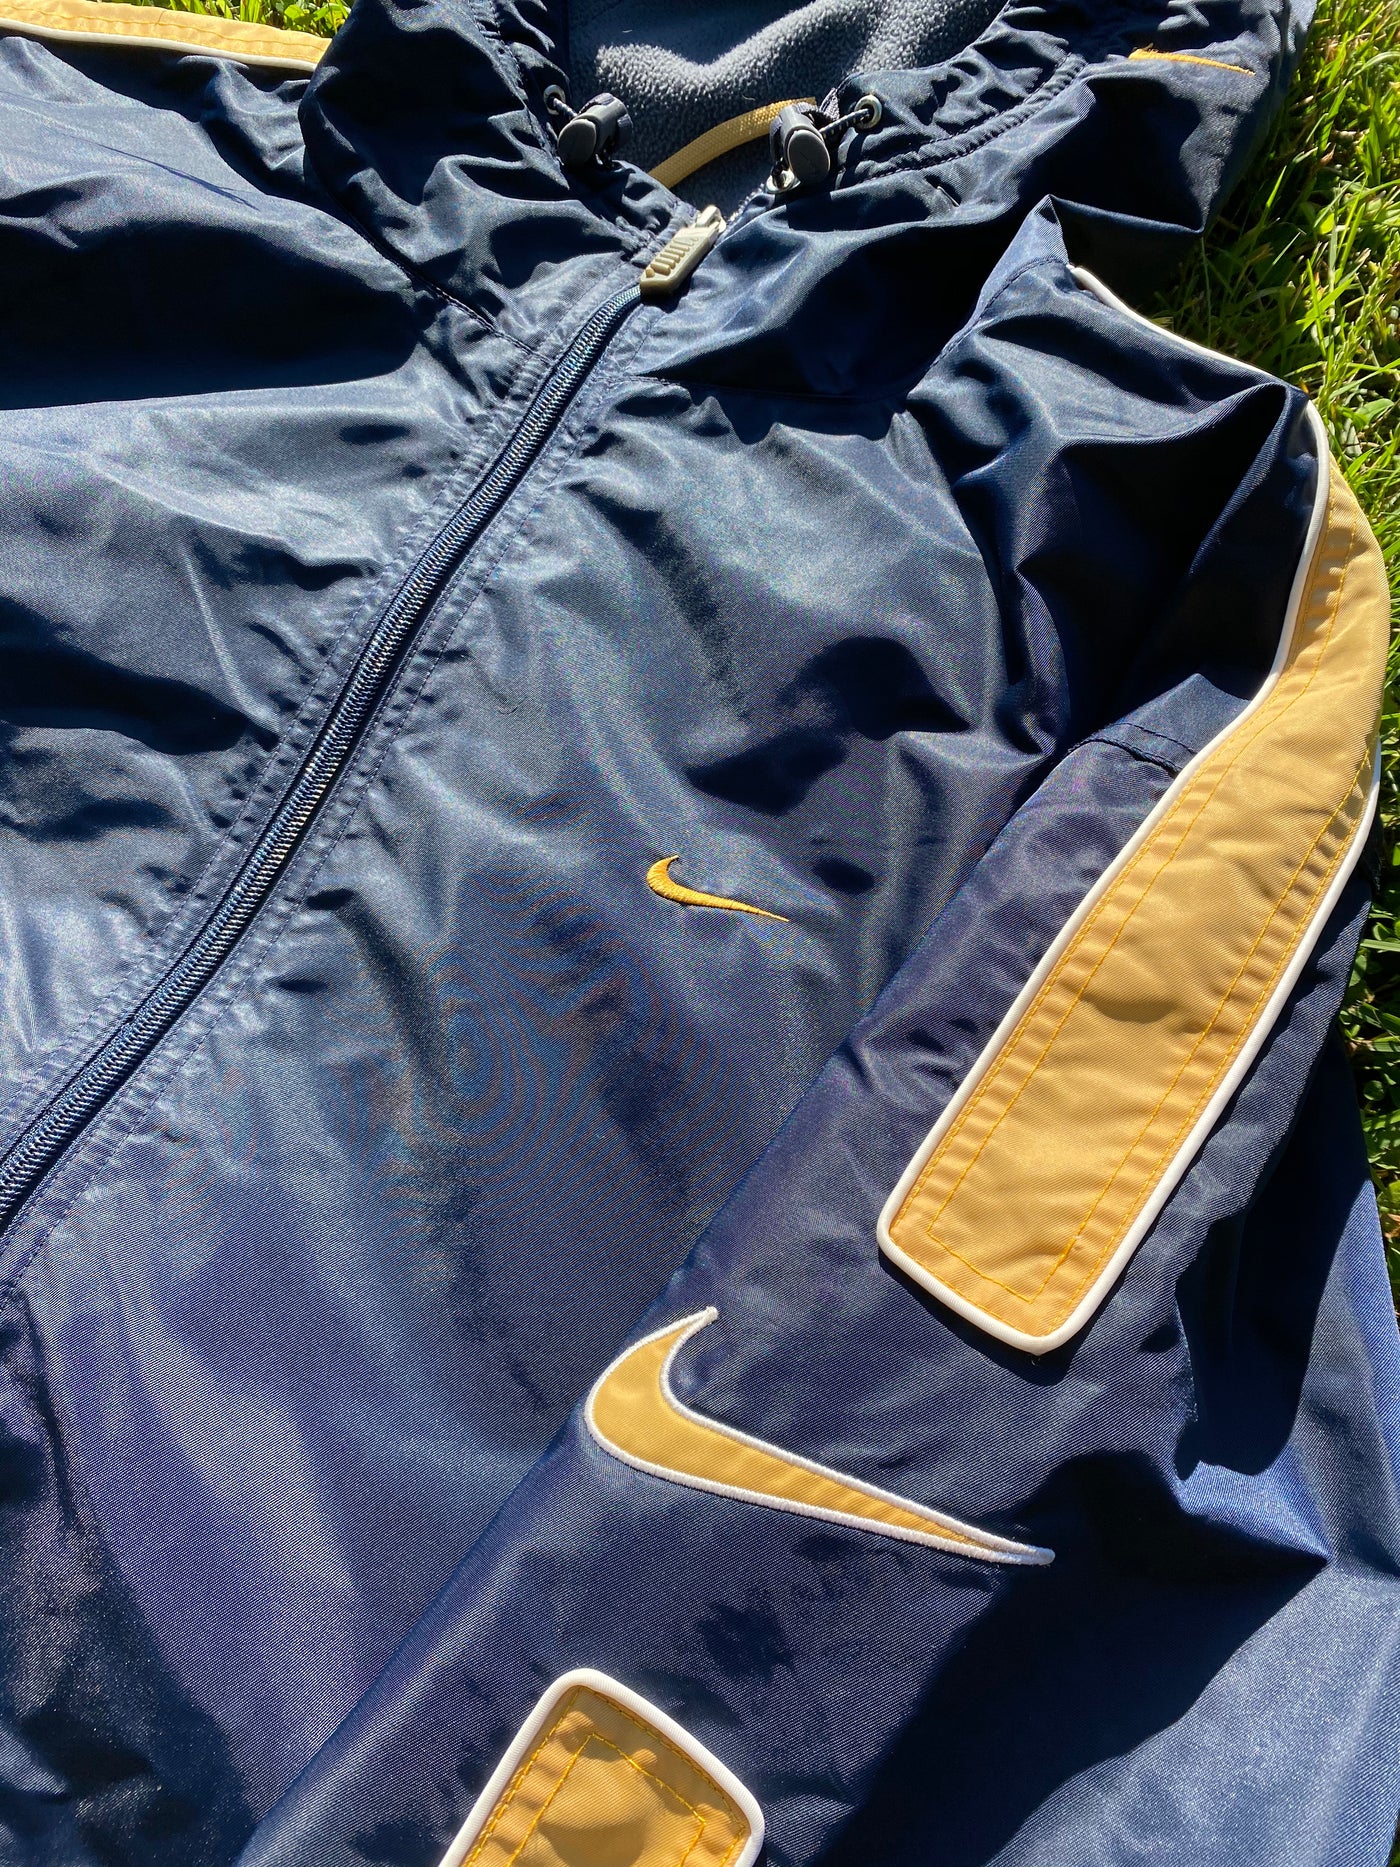 Vintage 90's Nike Shell Jacket